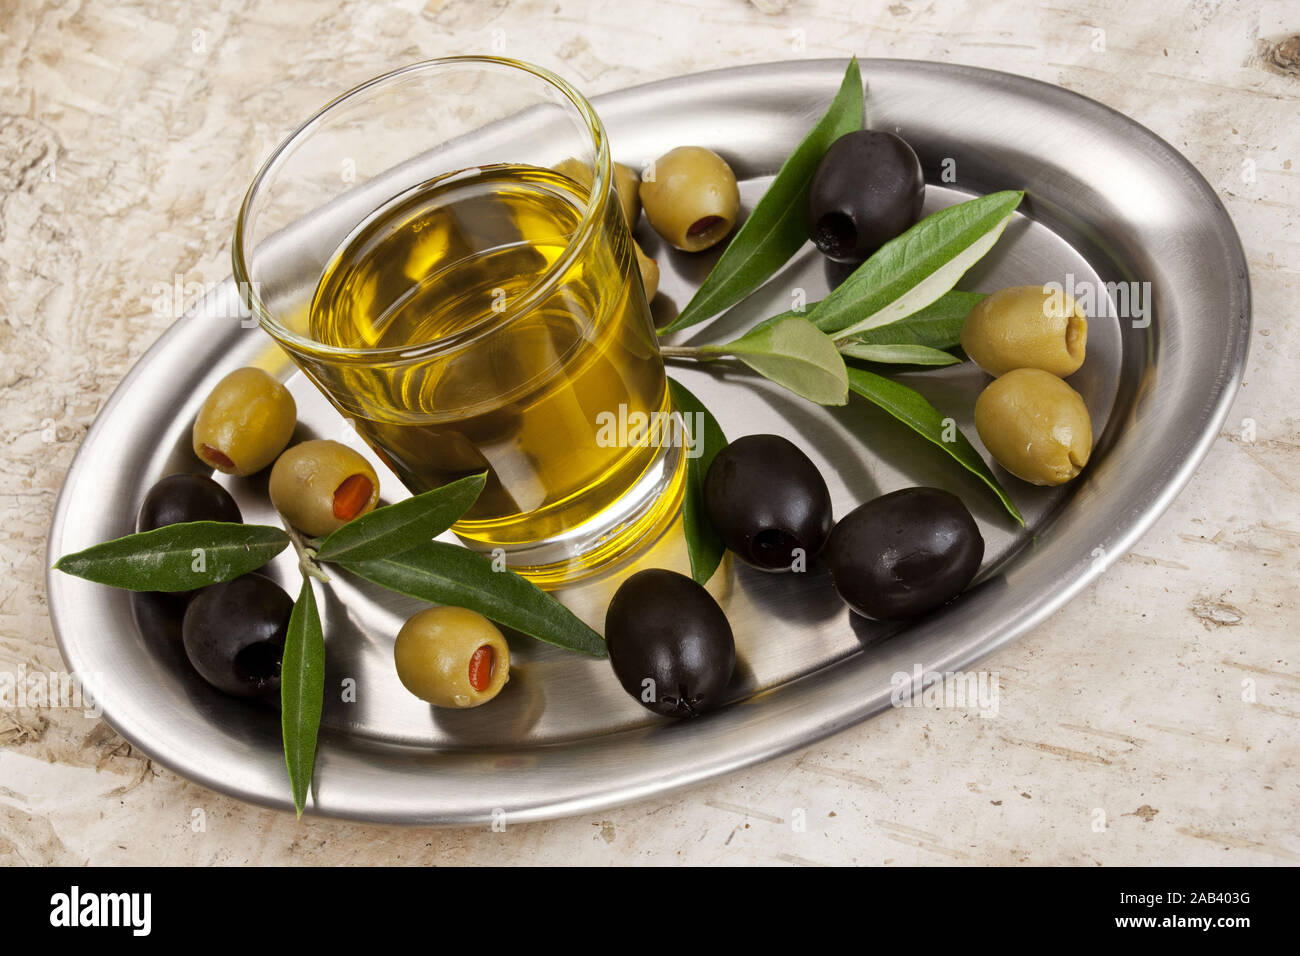 Glas mit Olivenoel und Oliven auf einem Tablett |Glass with olive oil and  olives on a platter| Stock Photo - Alamy